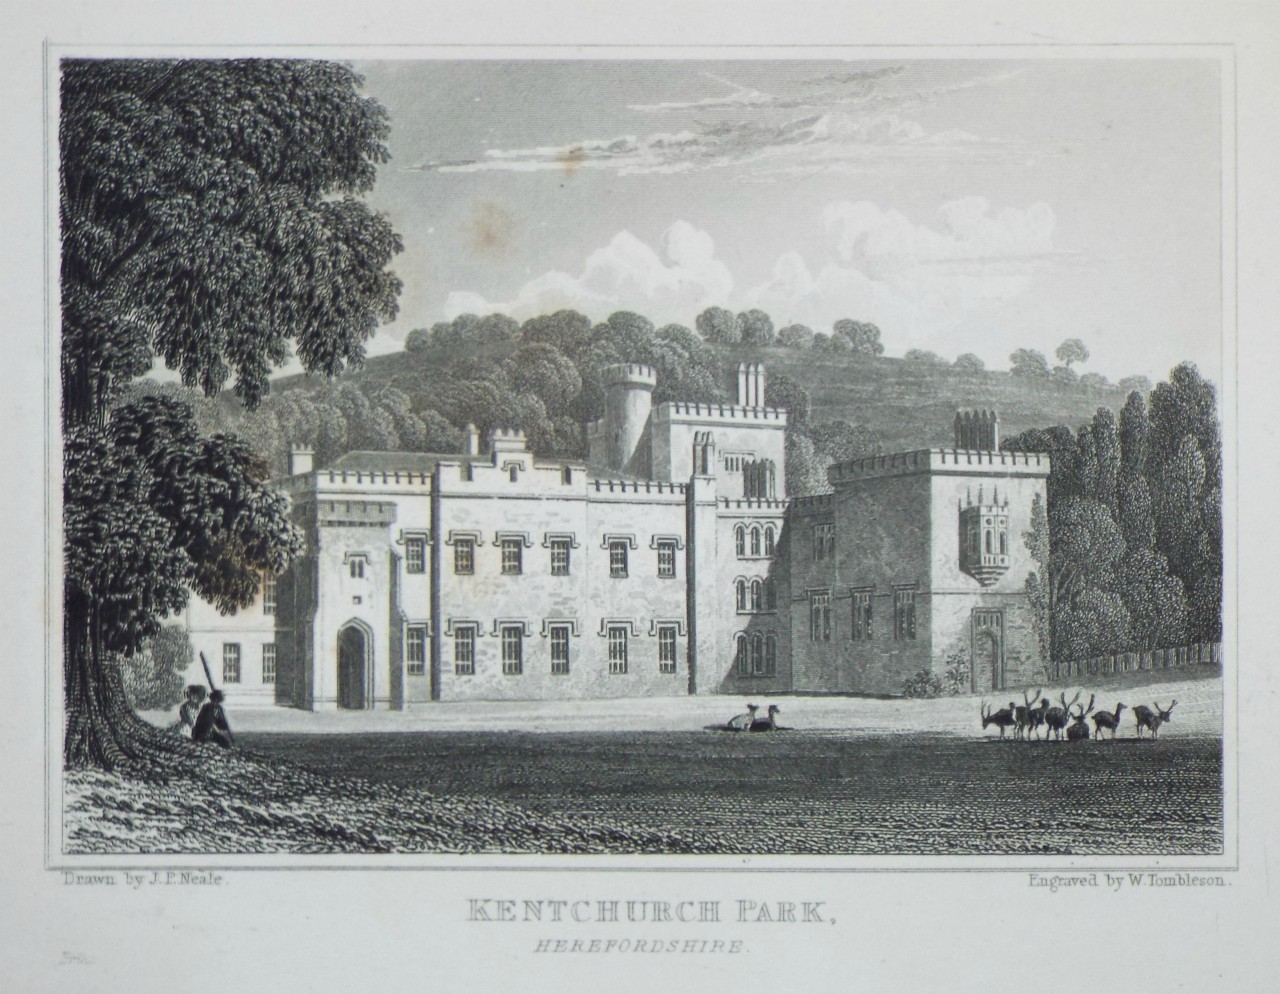 Print - Kentchurch Park, Herefordshire. - Tombleson